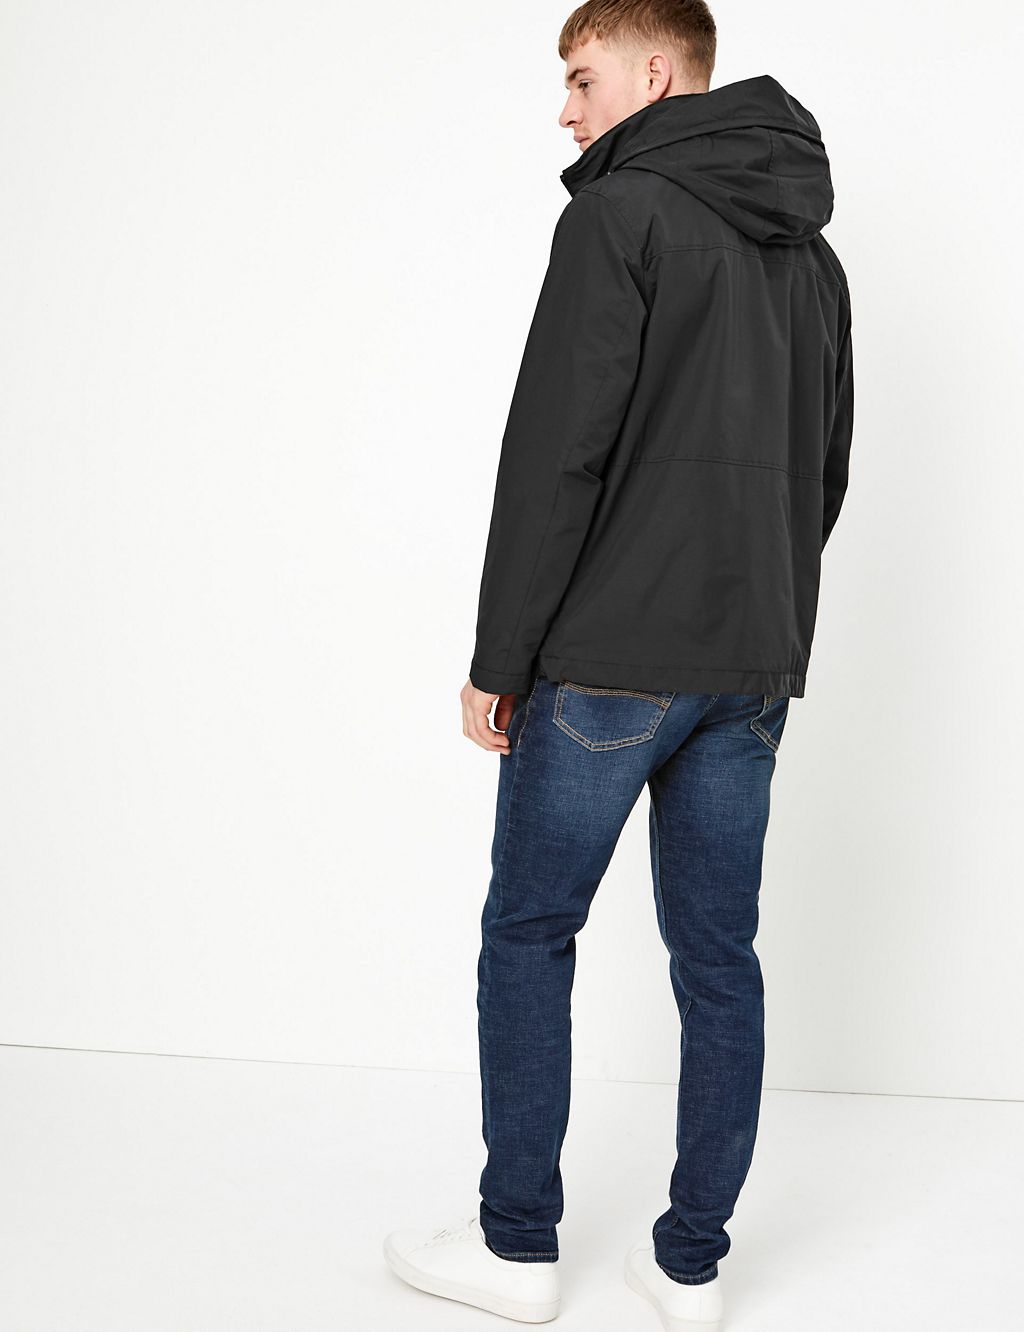 Fleece Lined Jacket with Stormwear™ 7 of 7